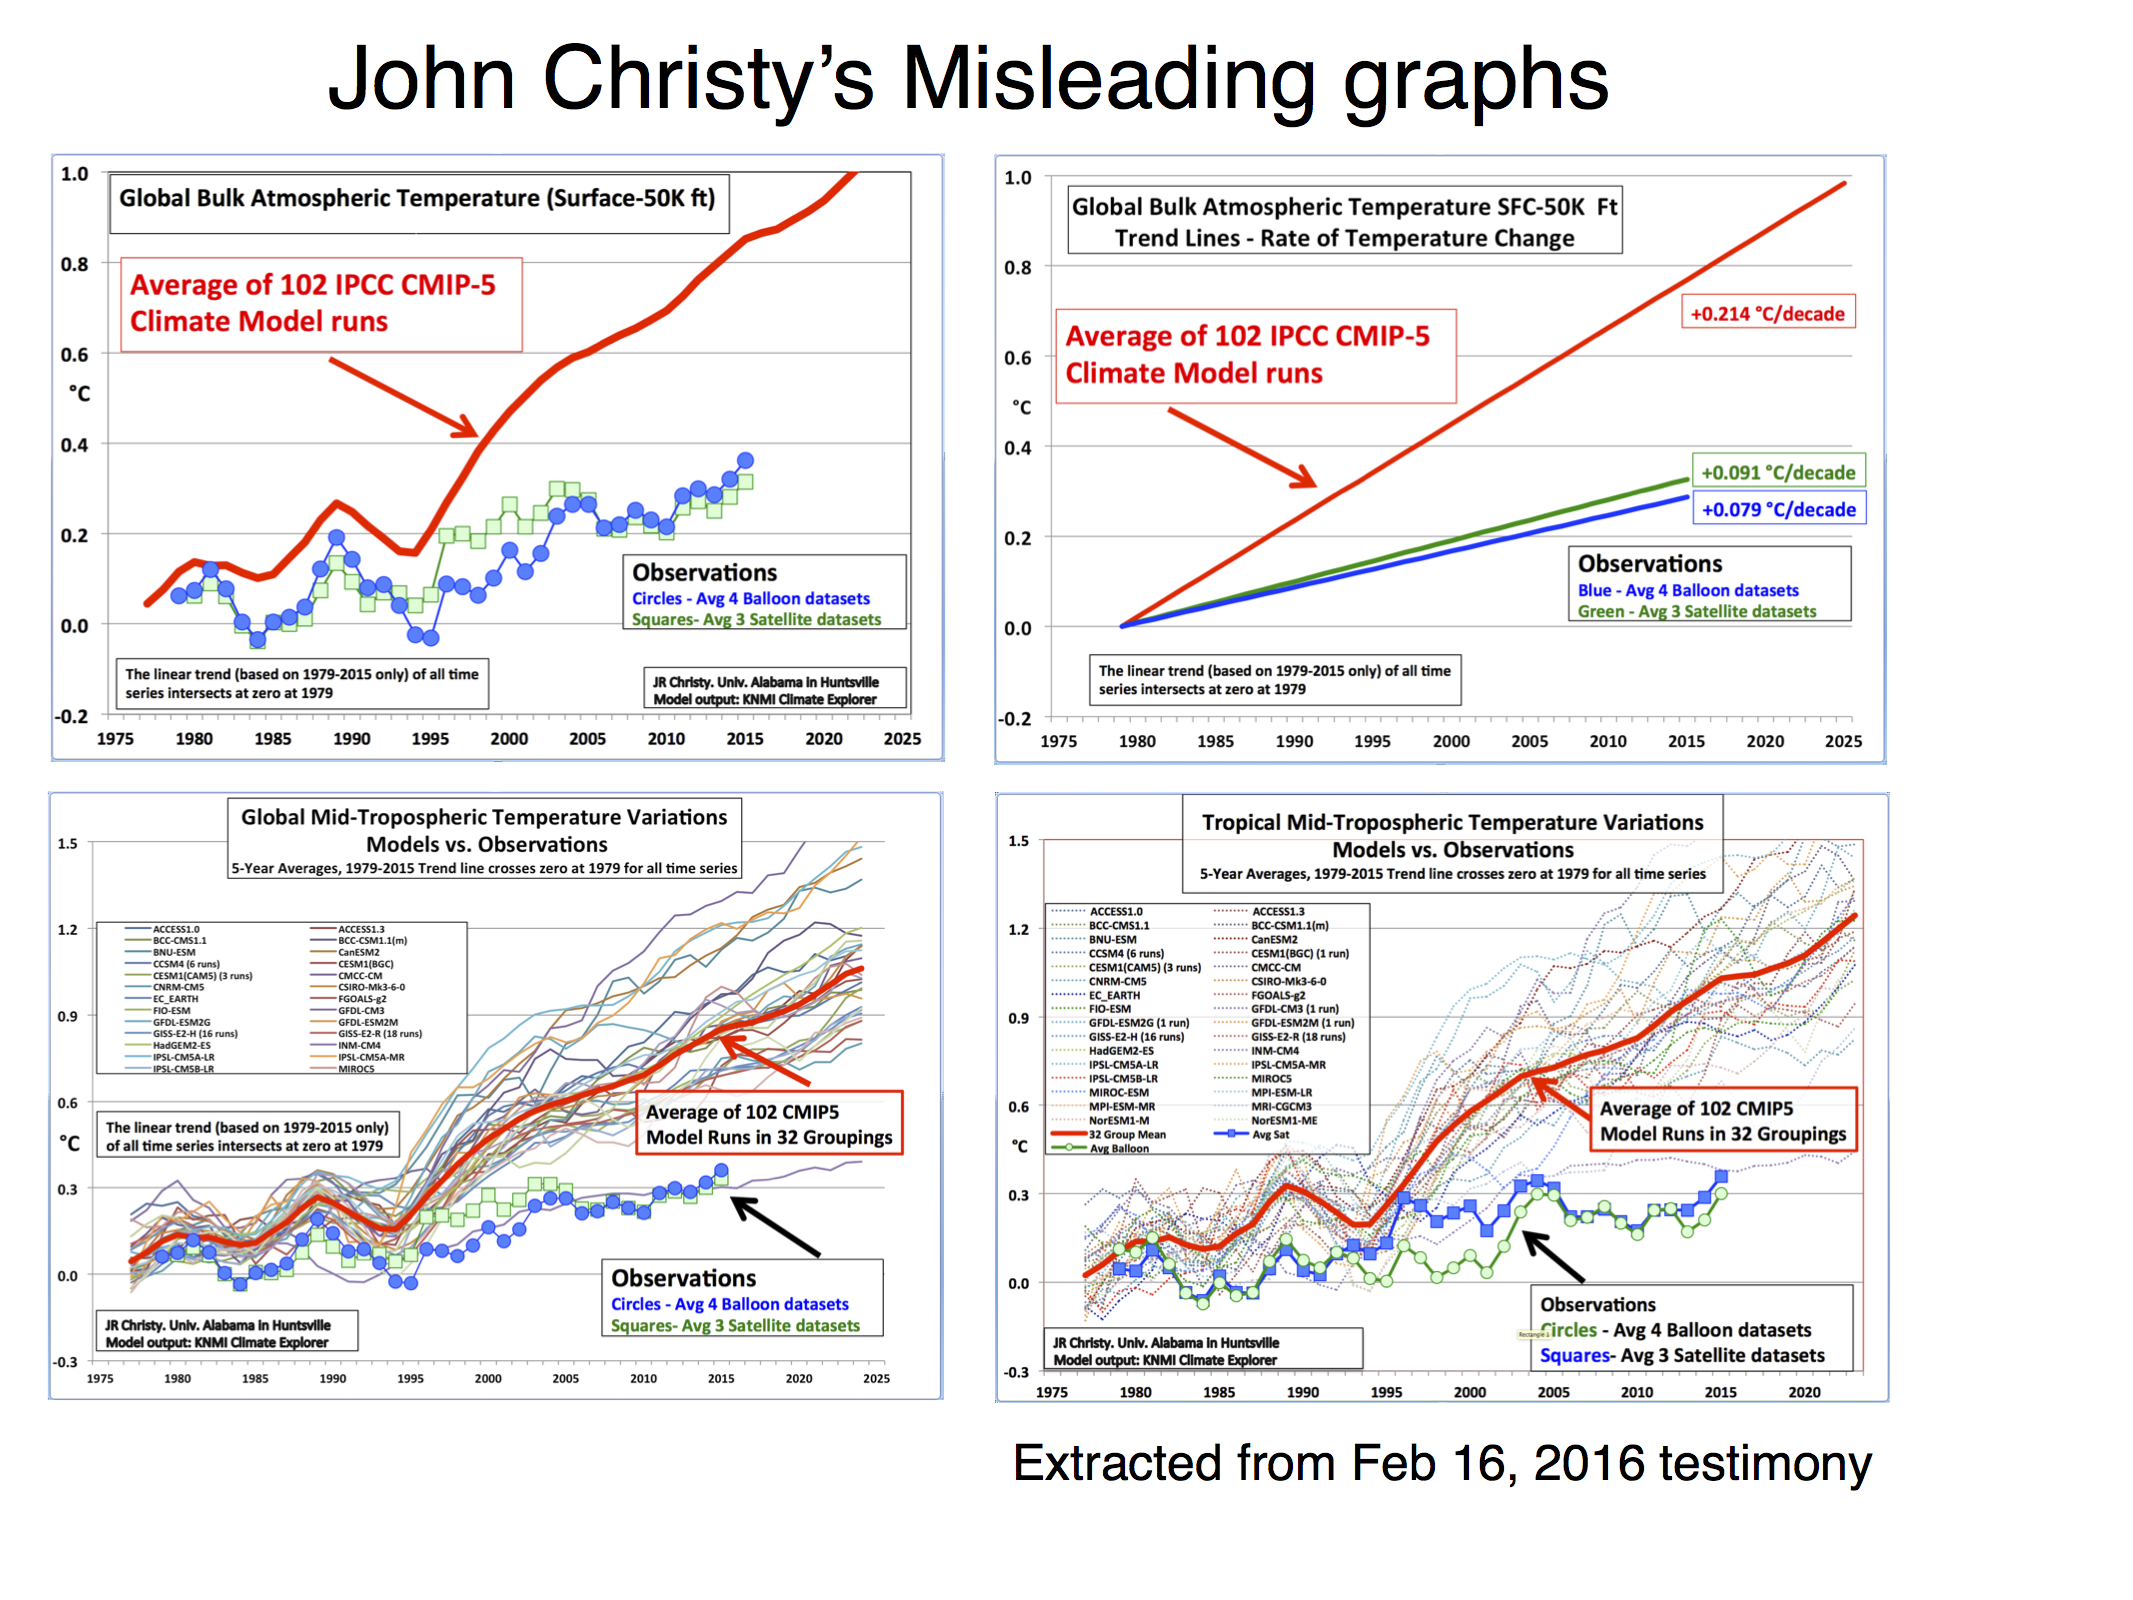 Christy misleading graphs